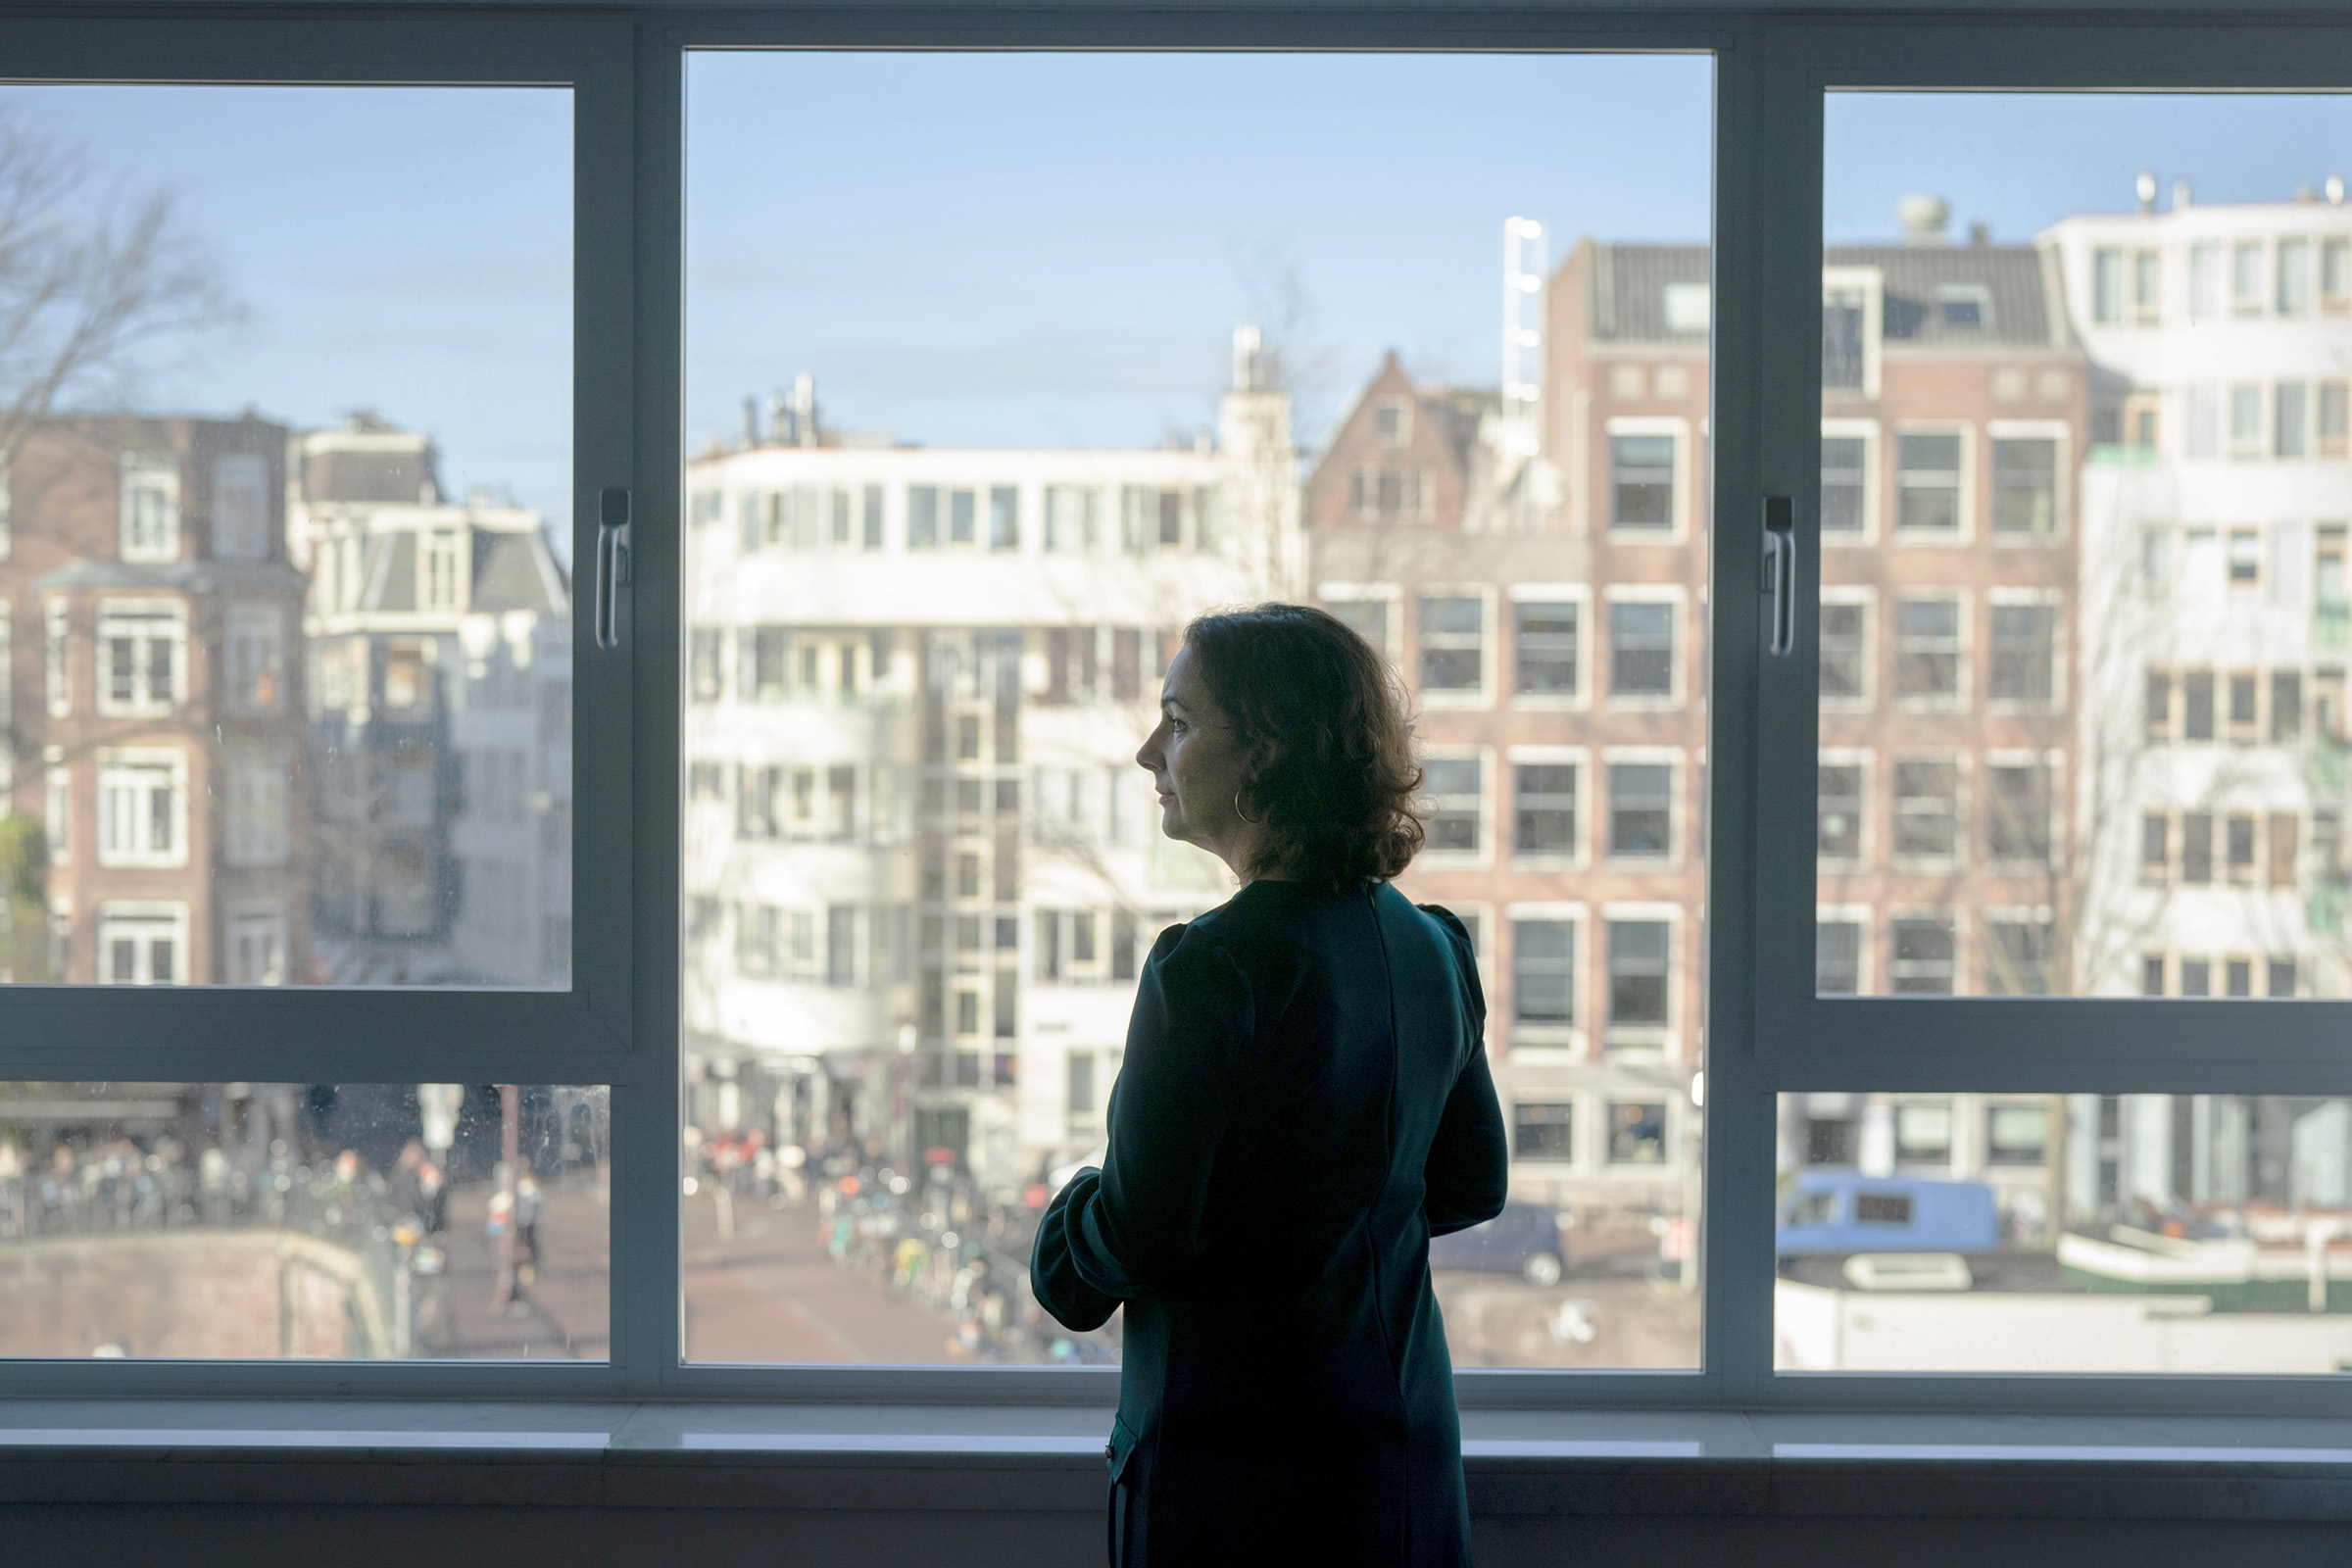 Femke Halsema, mayor of Amsterdam, poses for a photograph in her office in Amsterdam, Netherlands, on Nov. 30, 2018. (Jasper Juinen—Bloomberg via Getty Images)